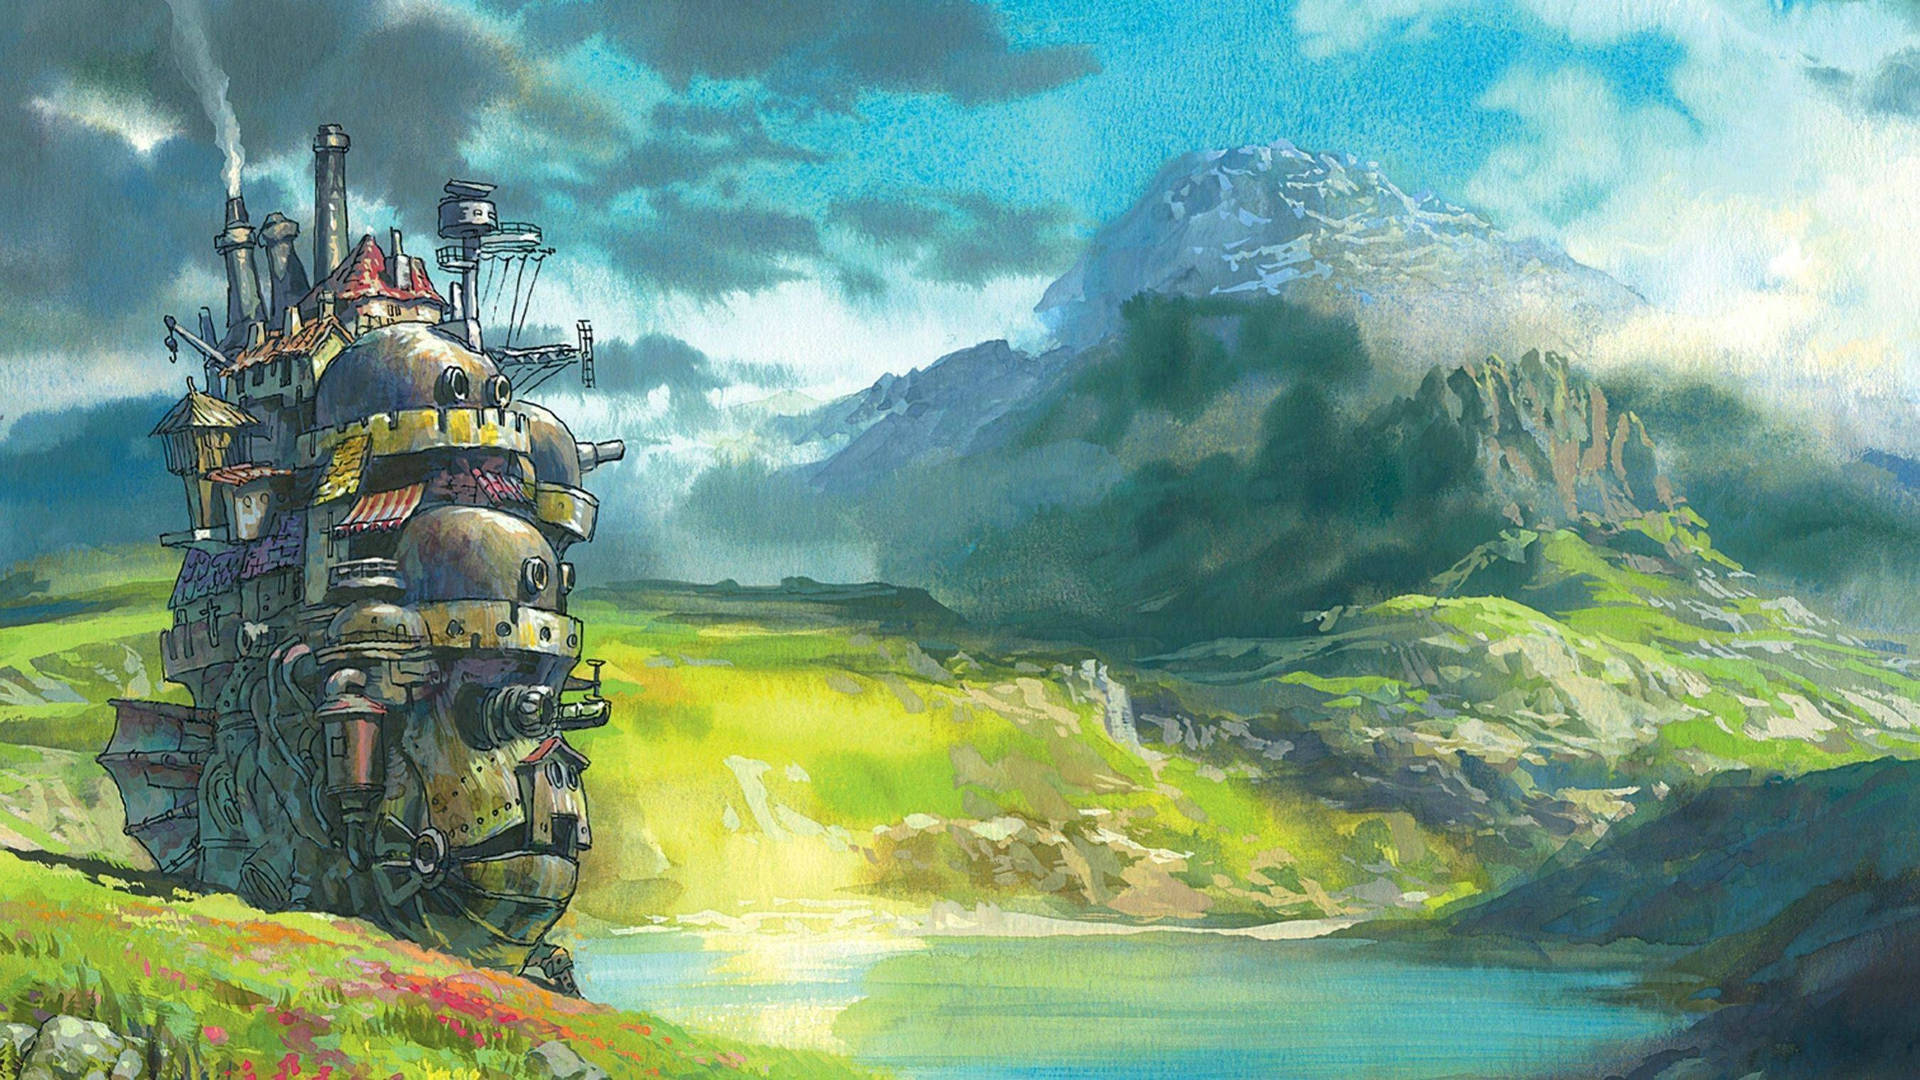 Studio Ghibli 2699X1518 Wallpaper and Background Image